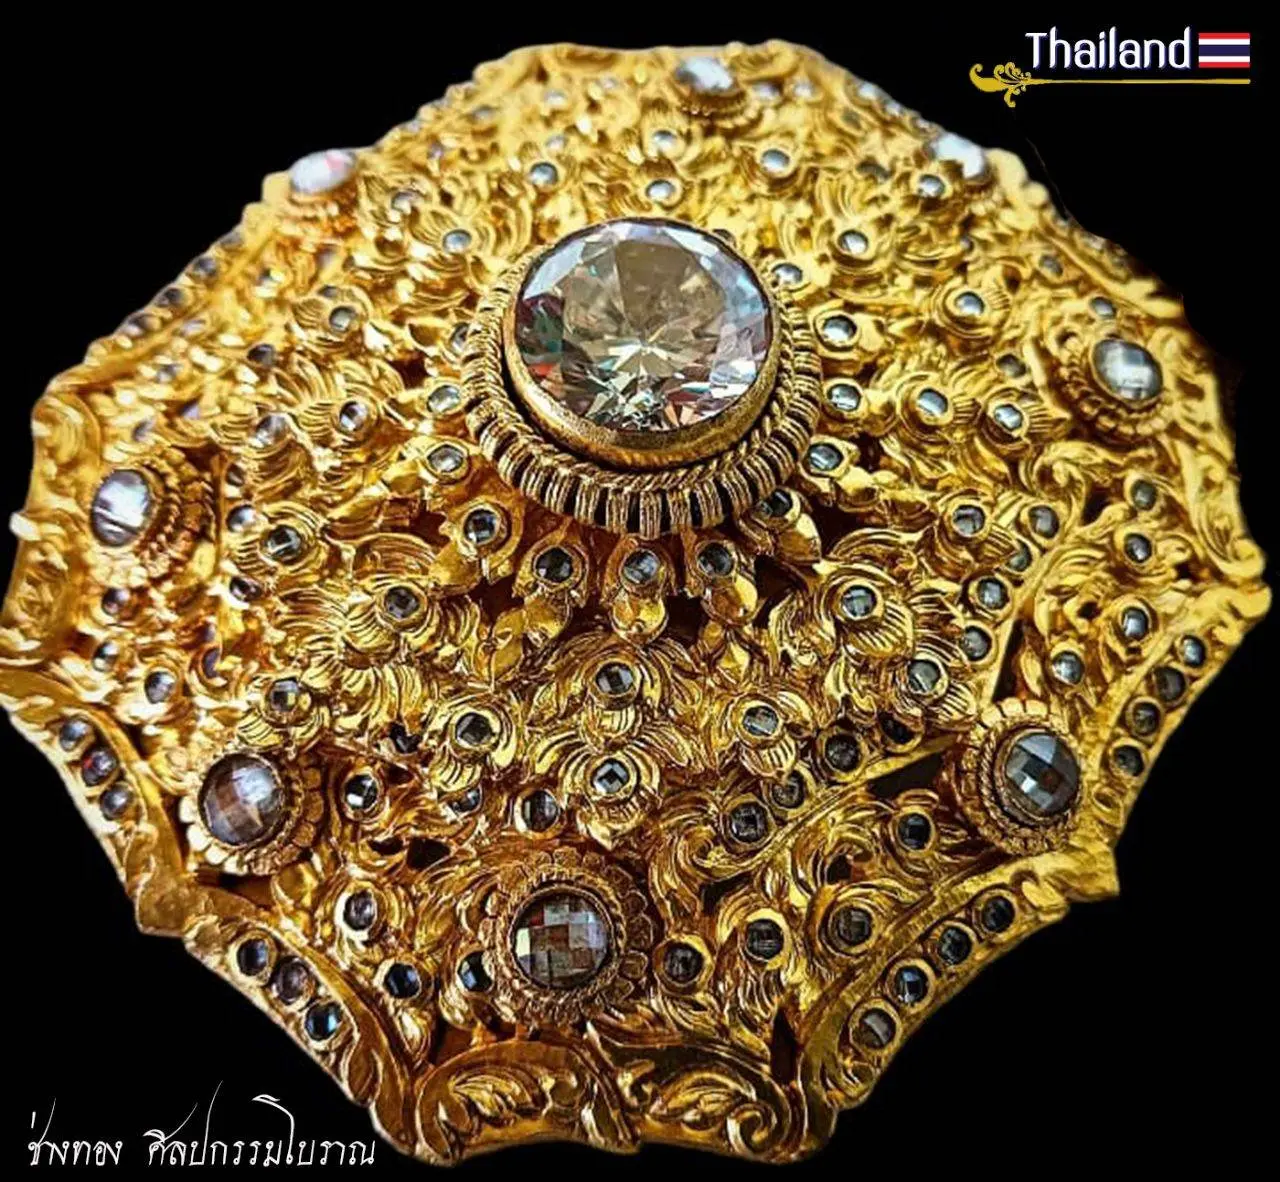 THAILAND | Ancient Thai Jewelry ♦